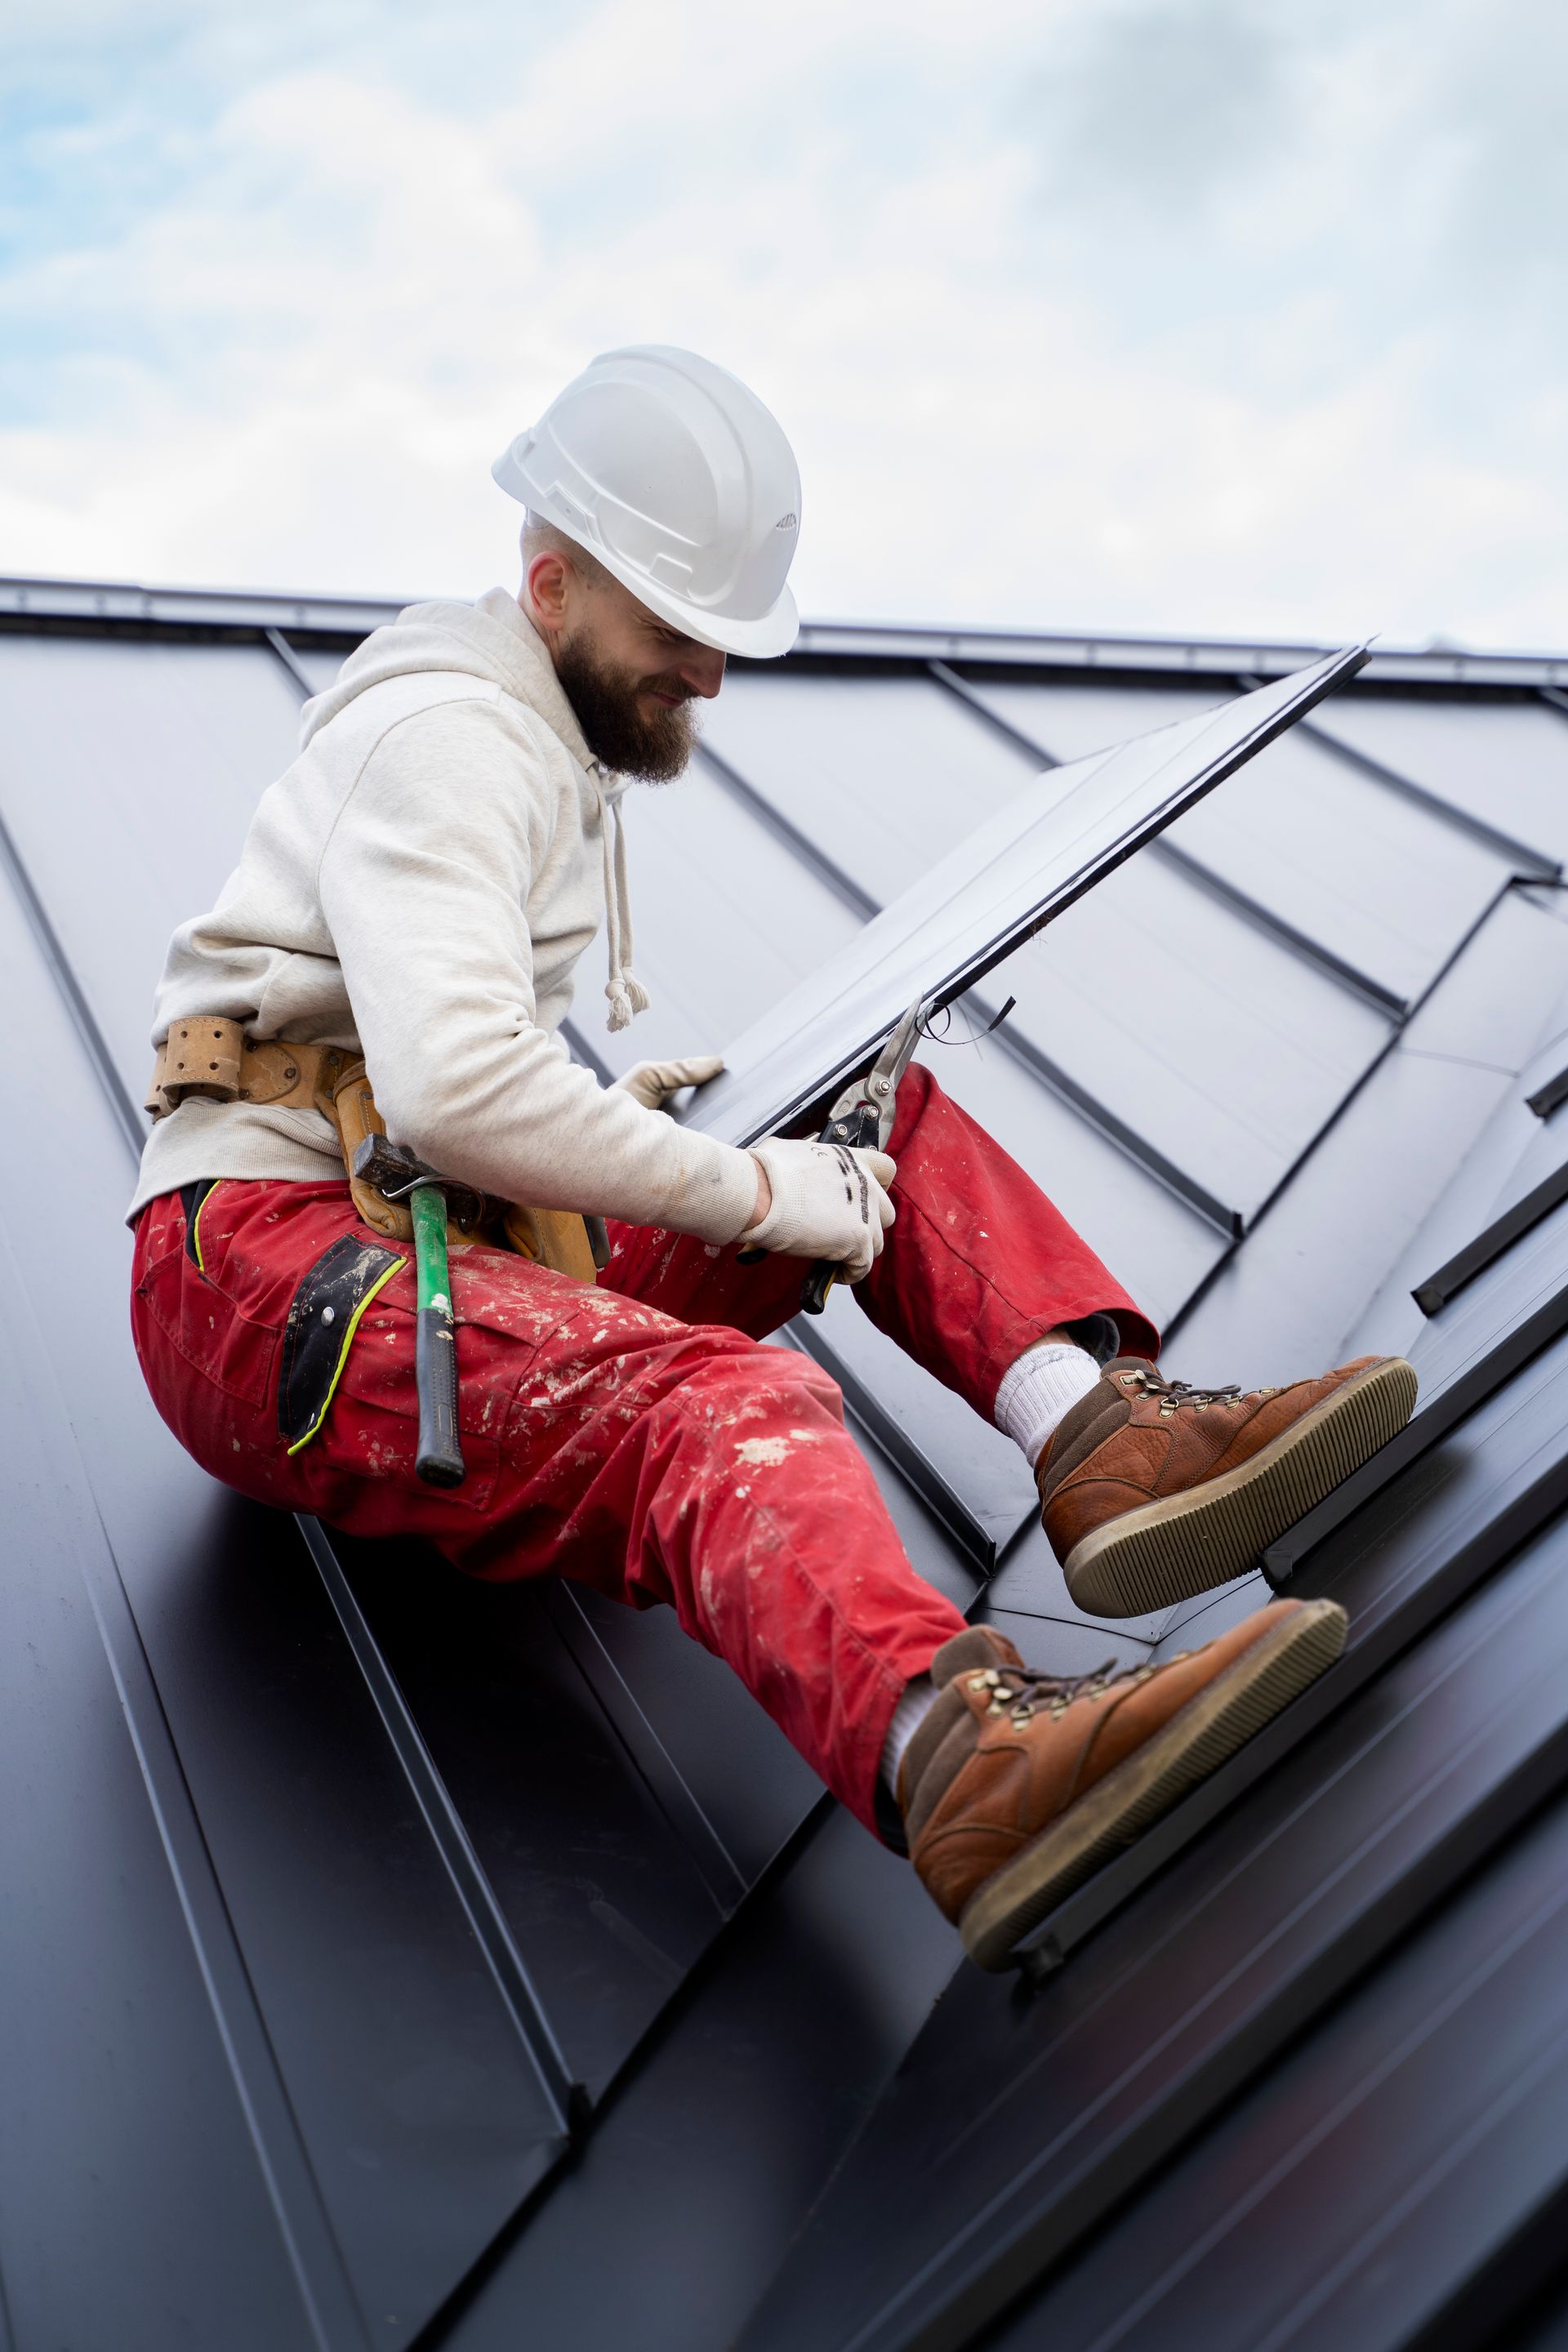 Contractor repairs roof leaks